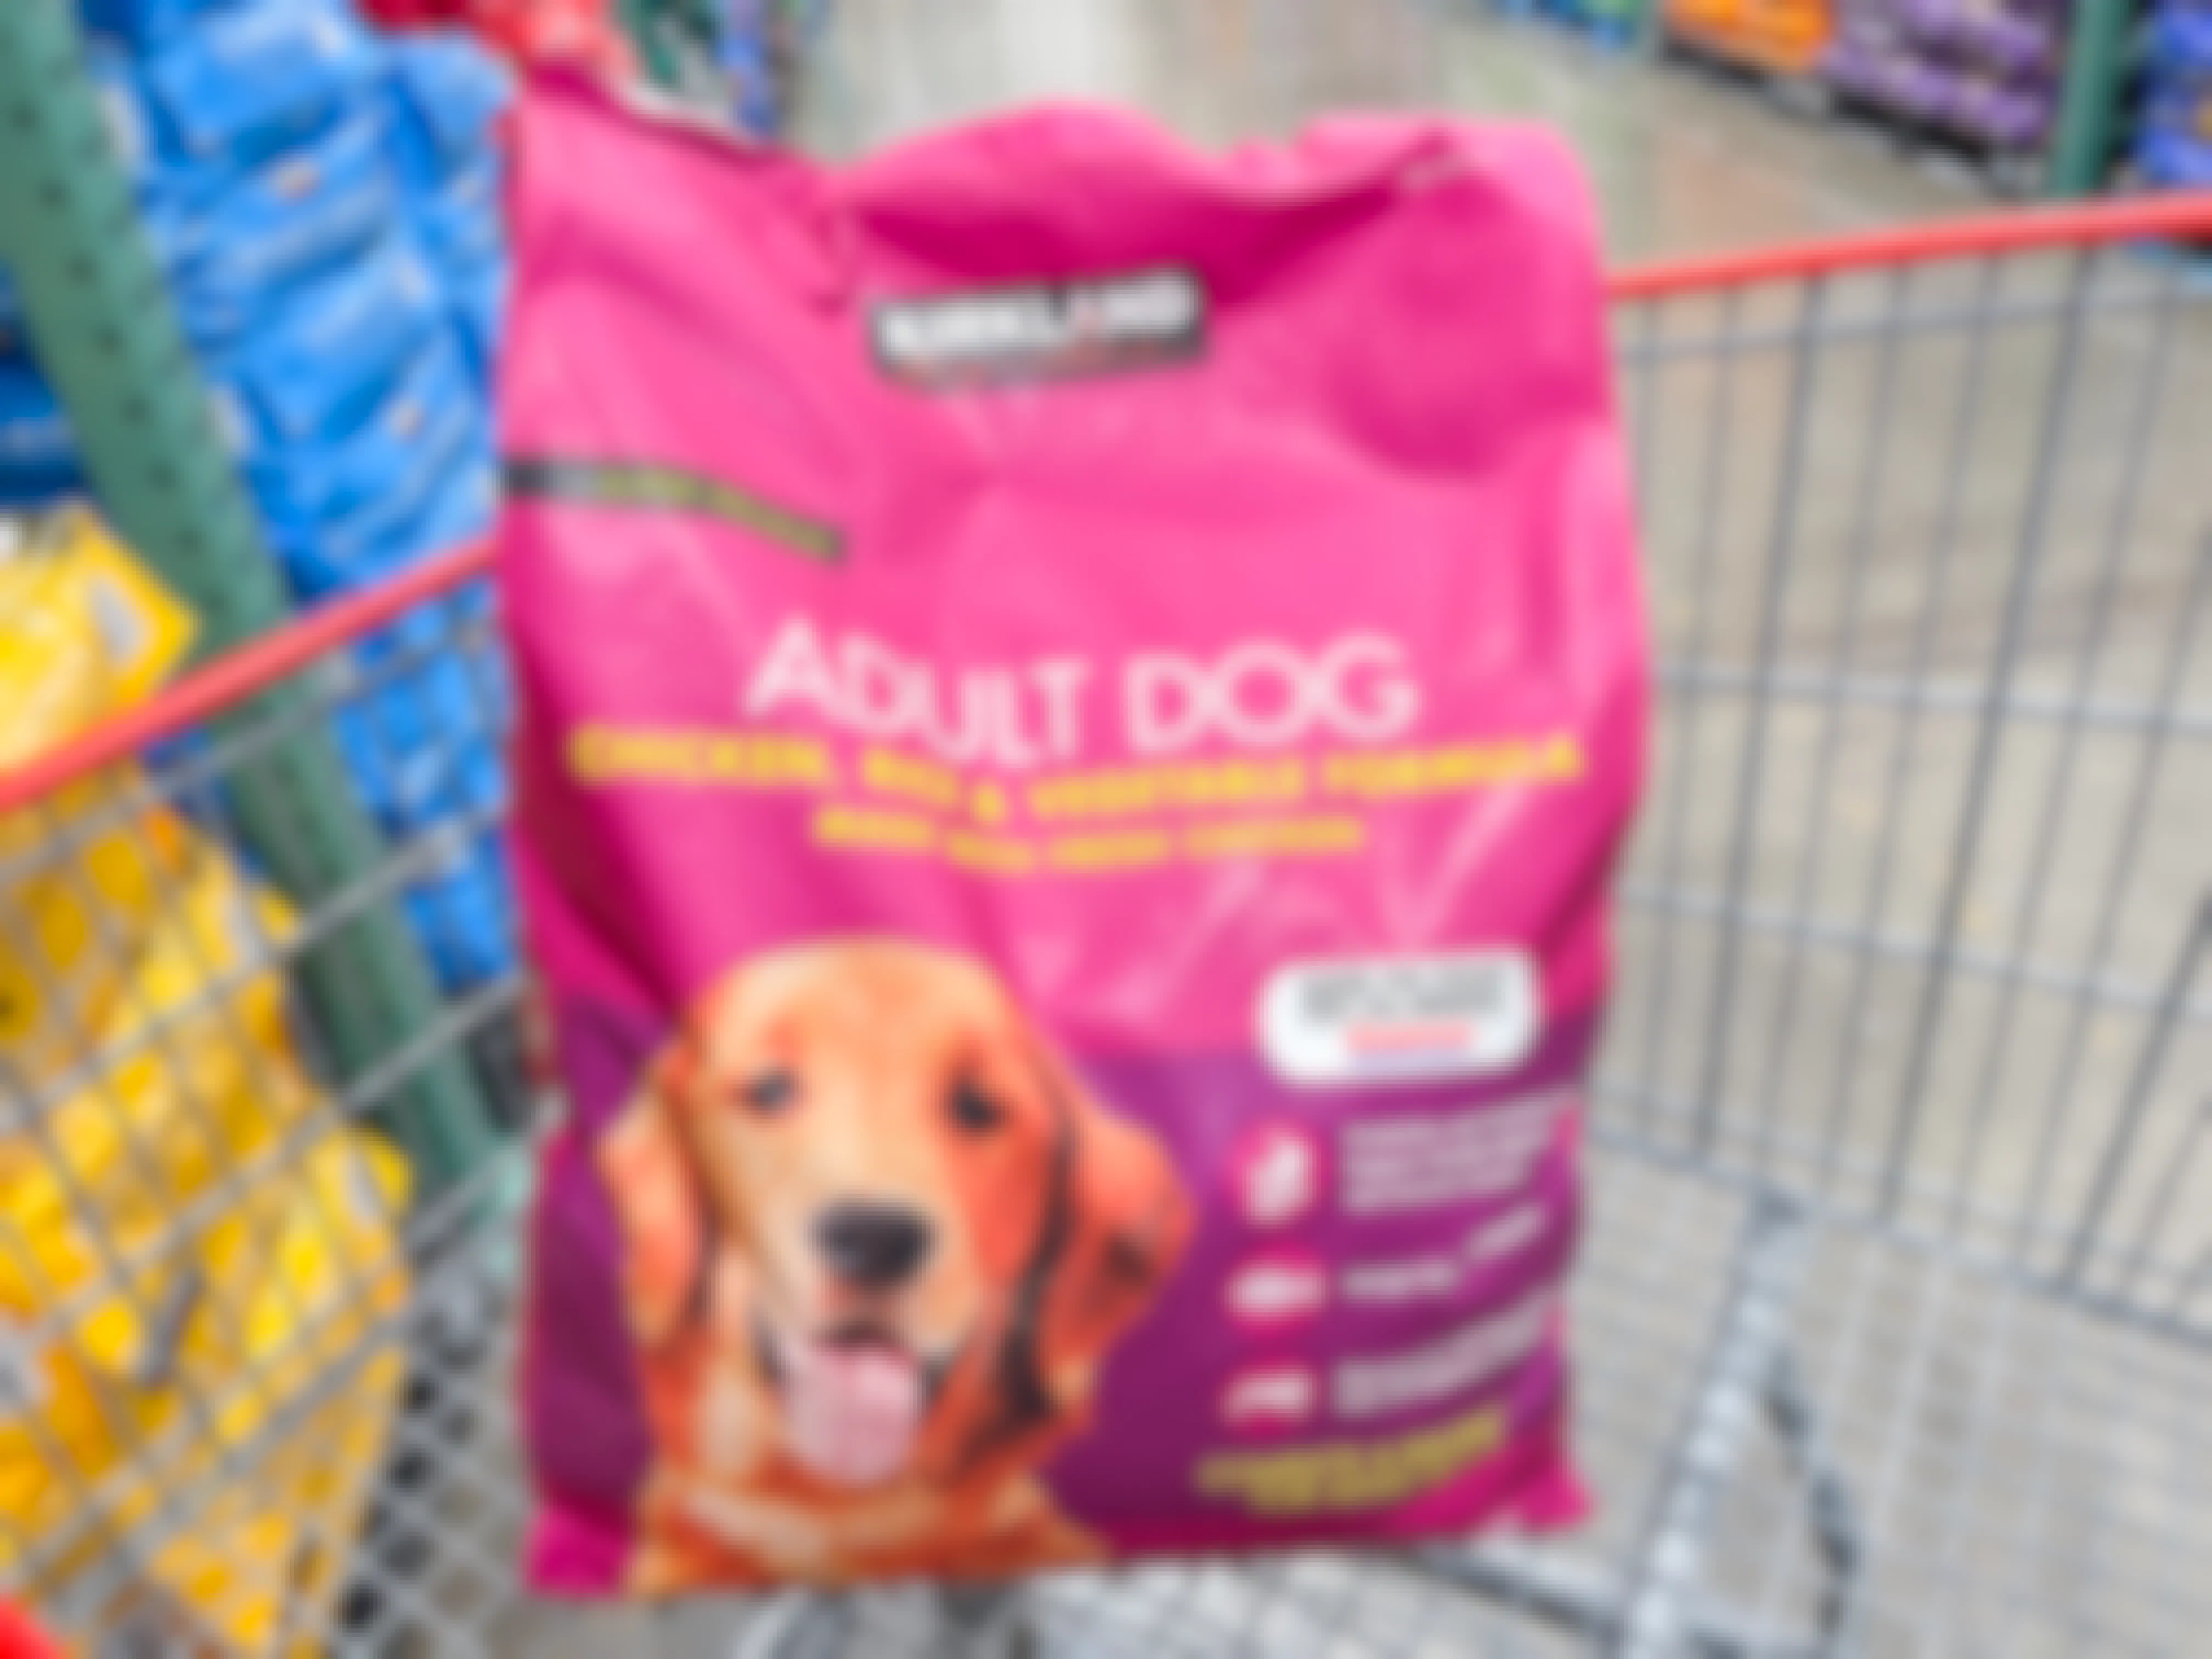 bag of dog food in cart